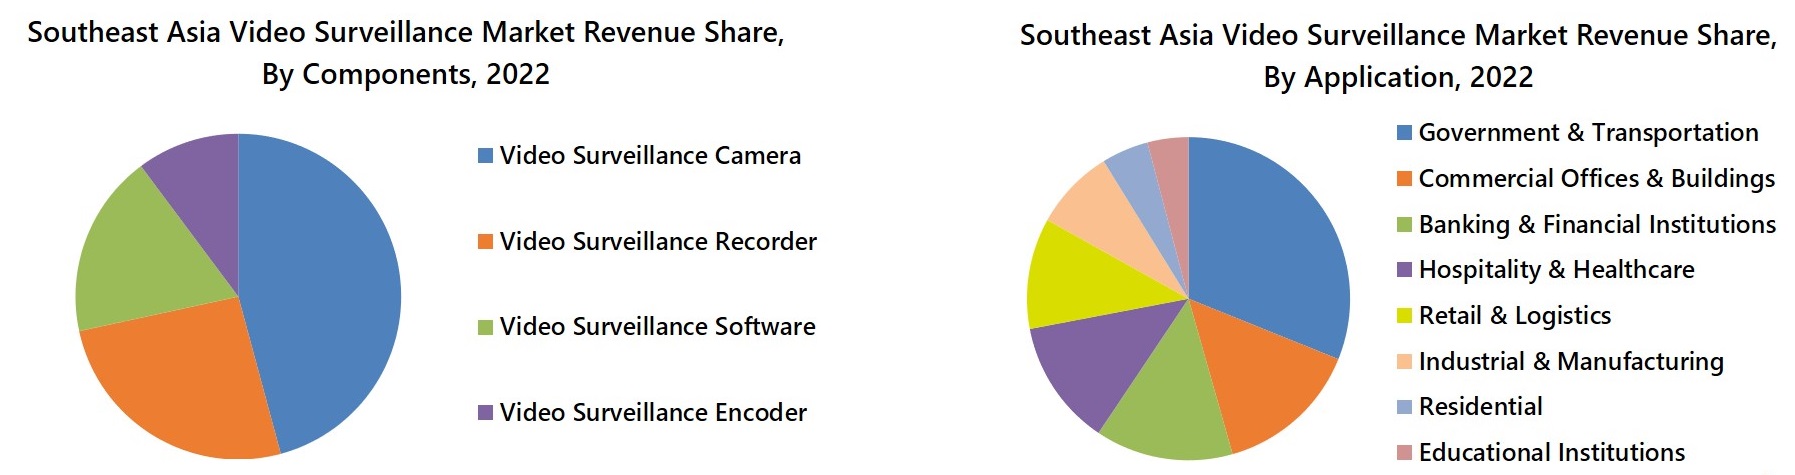 Southeast Asia Video Surveillance Market